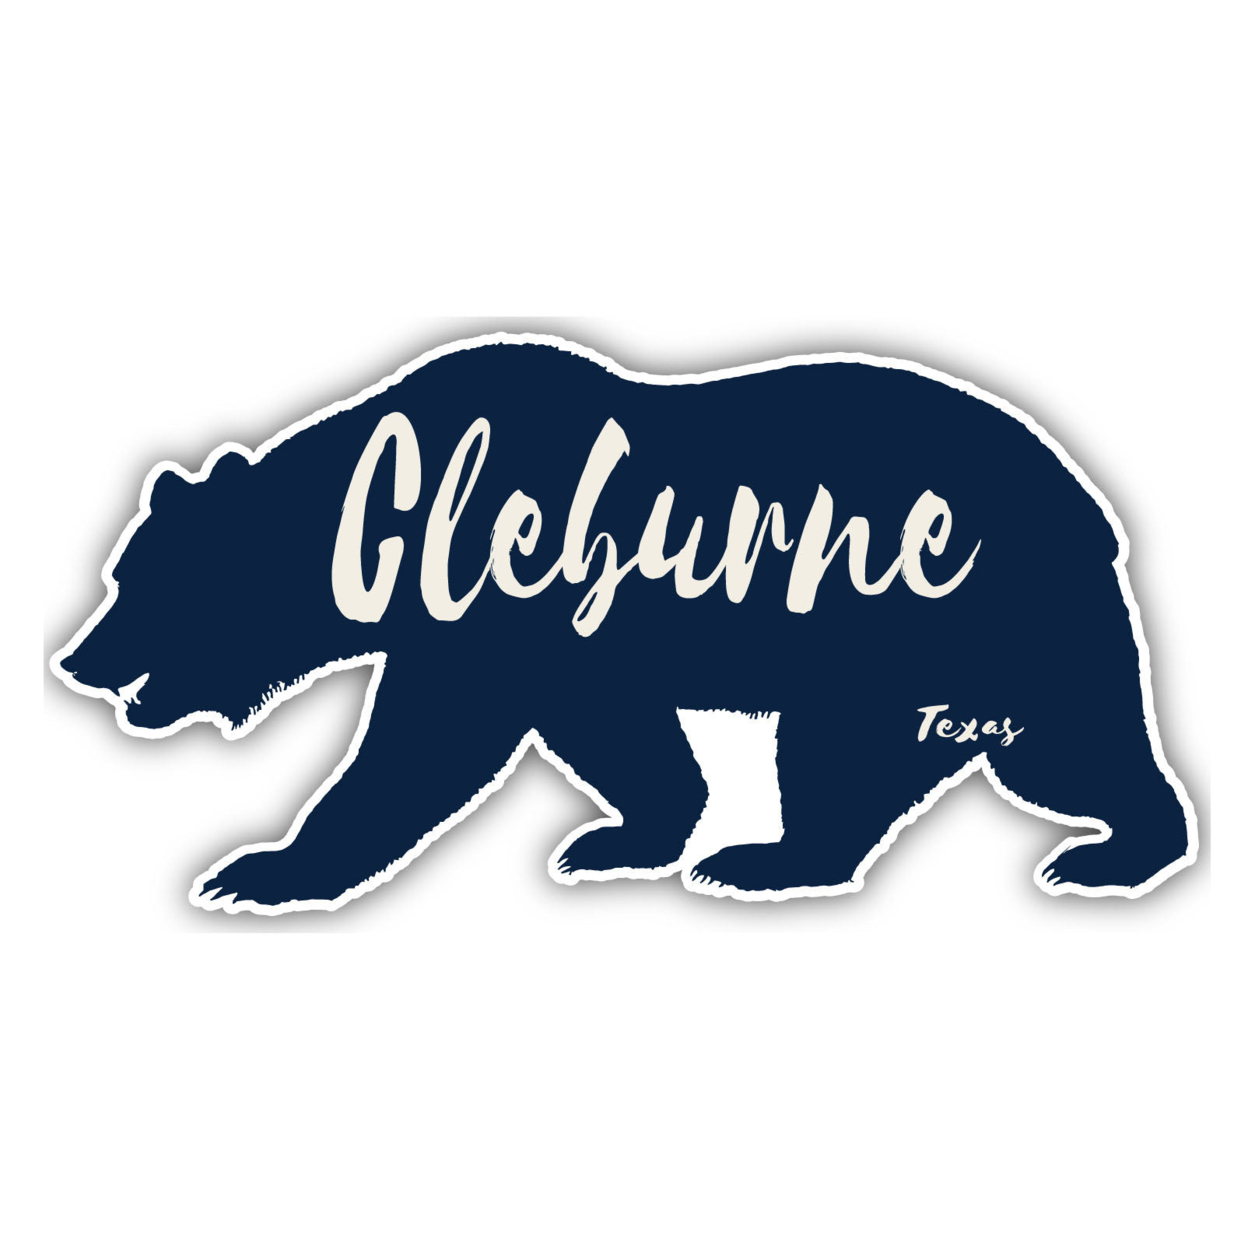 Cleburne Texas Souvenir Decorative Stickers (Choose Theme And Size) - Single Unit, 10-Inch, Bear